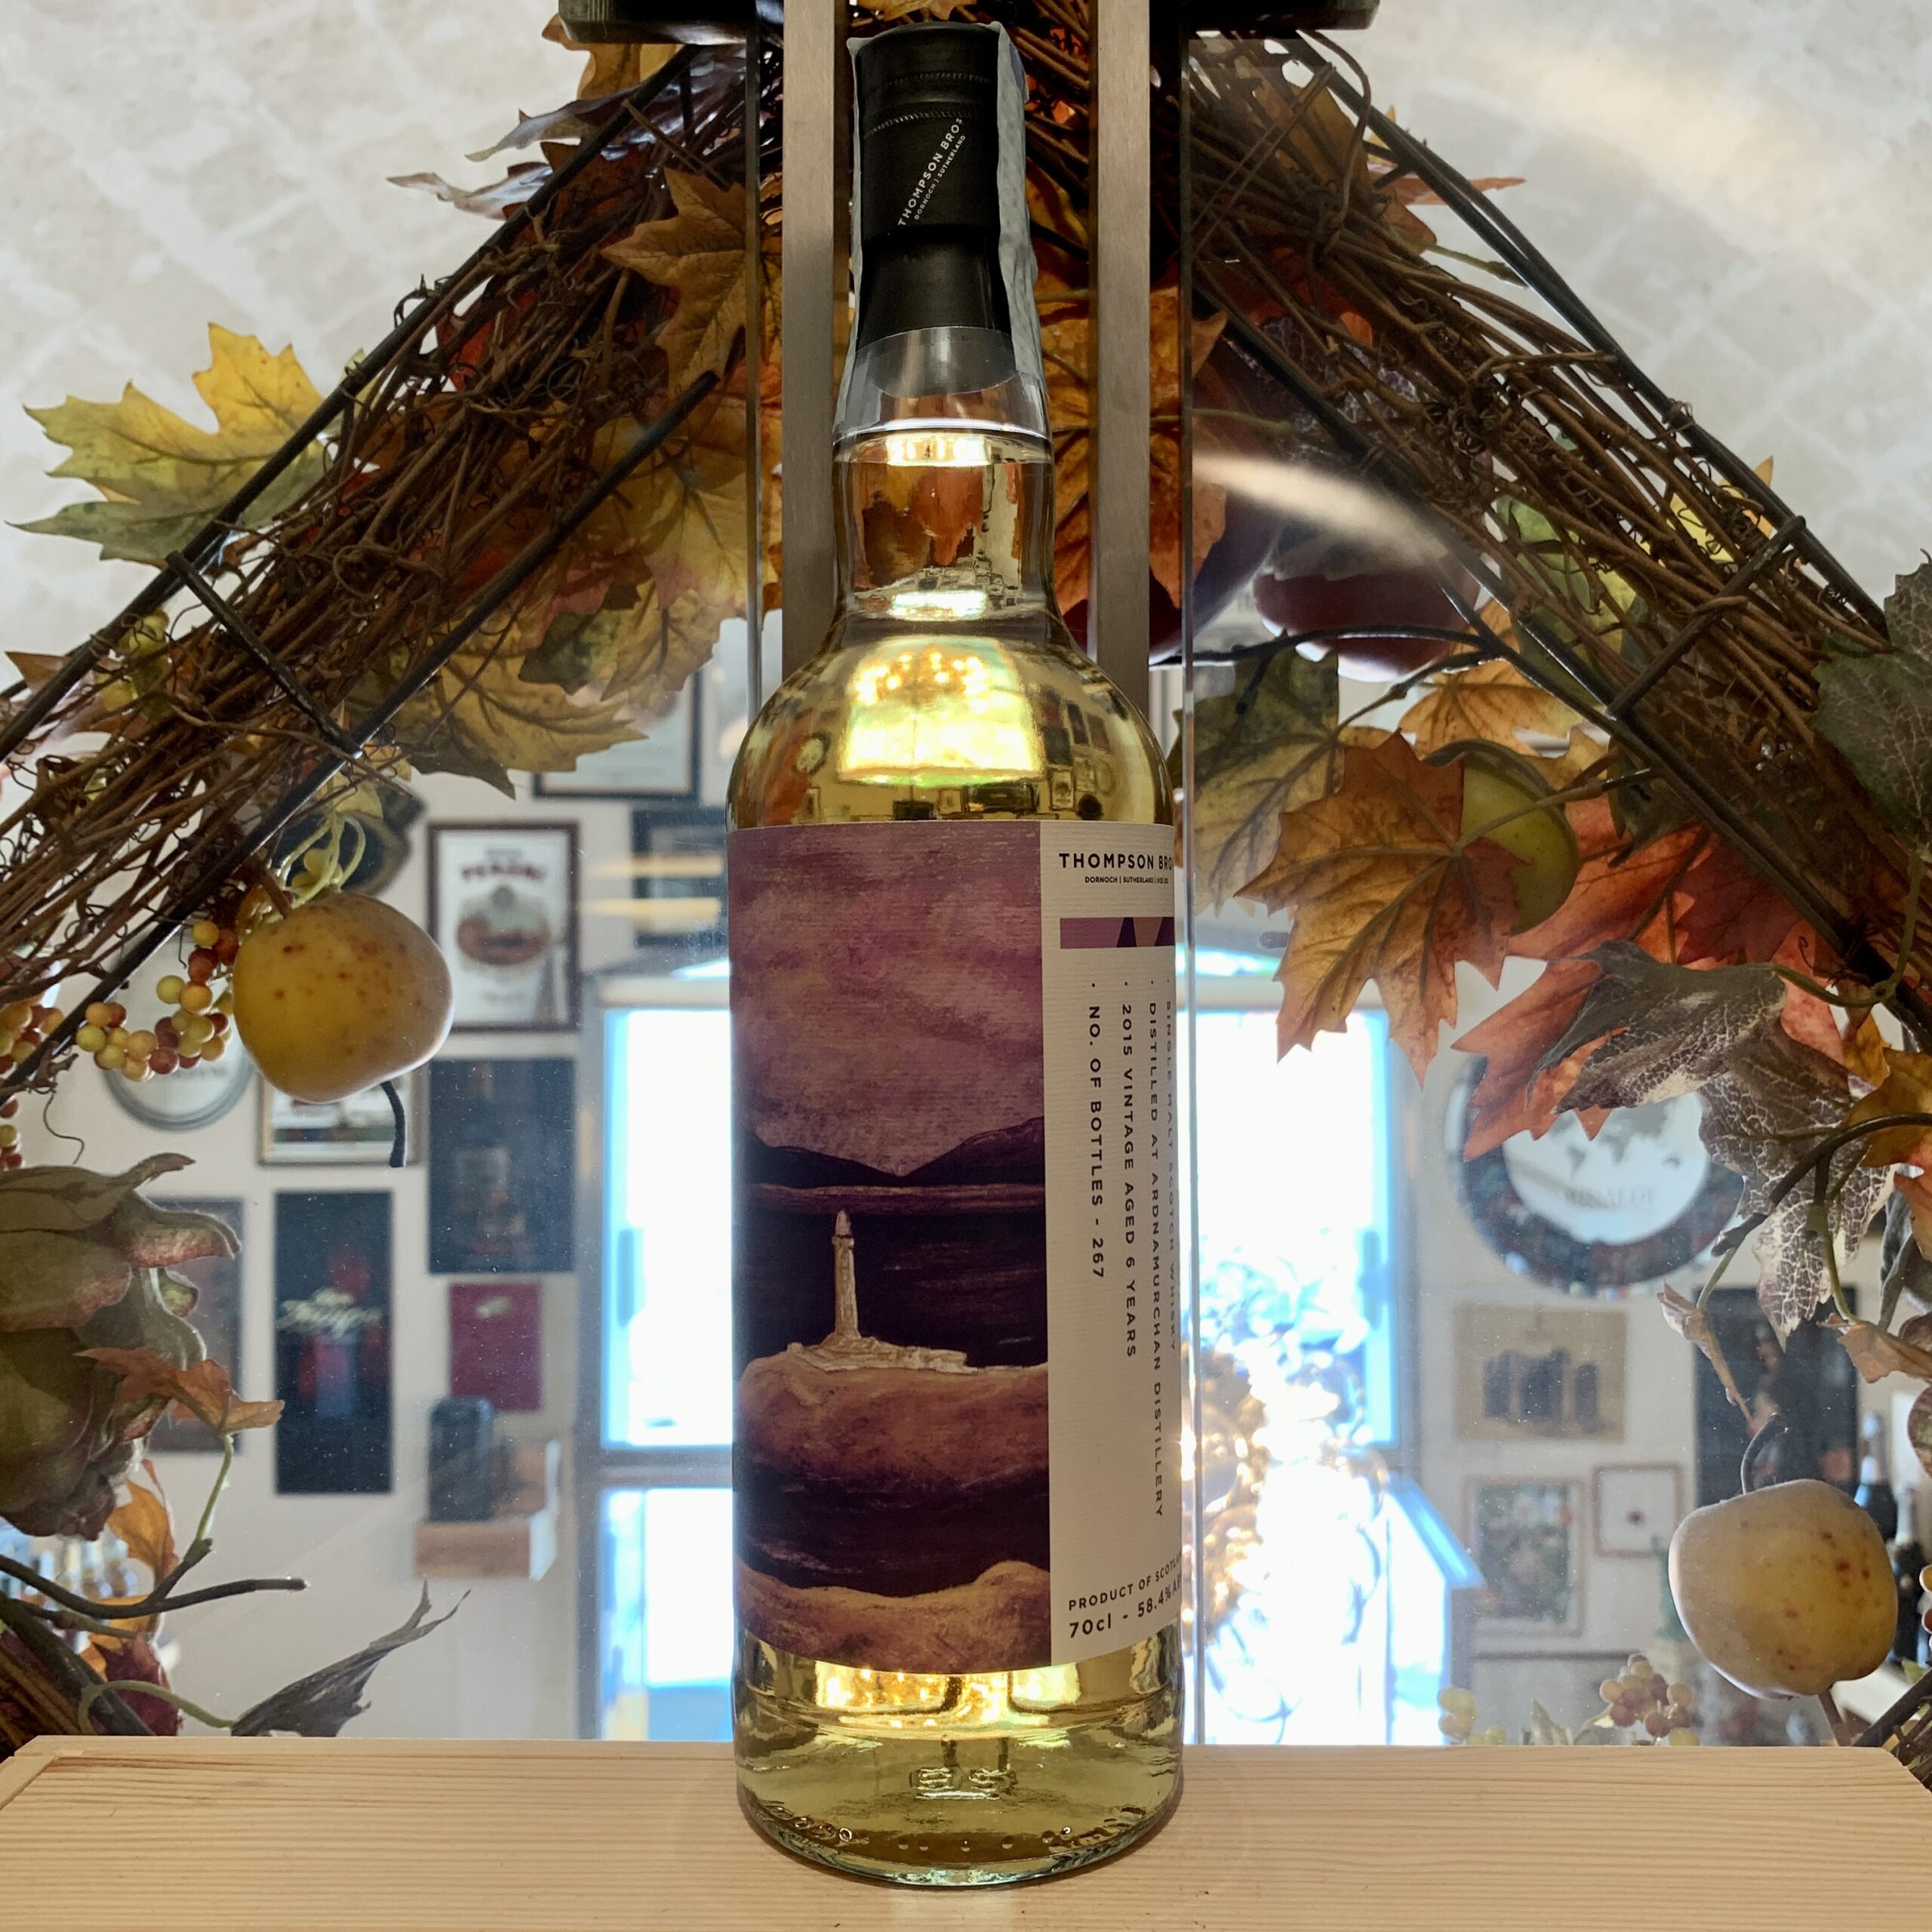 Thompson Bros Ardnamurchan Single Malt Scotch Whisky 2015 6 YO